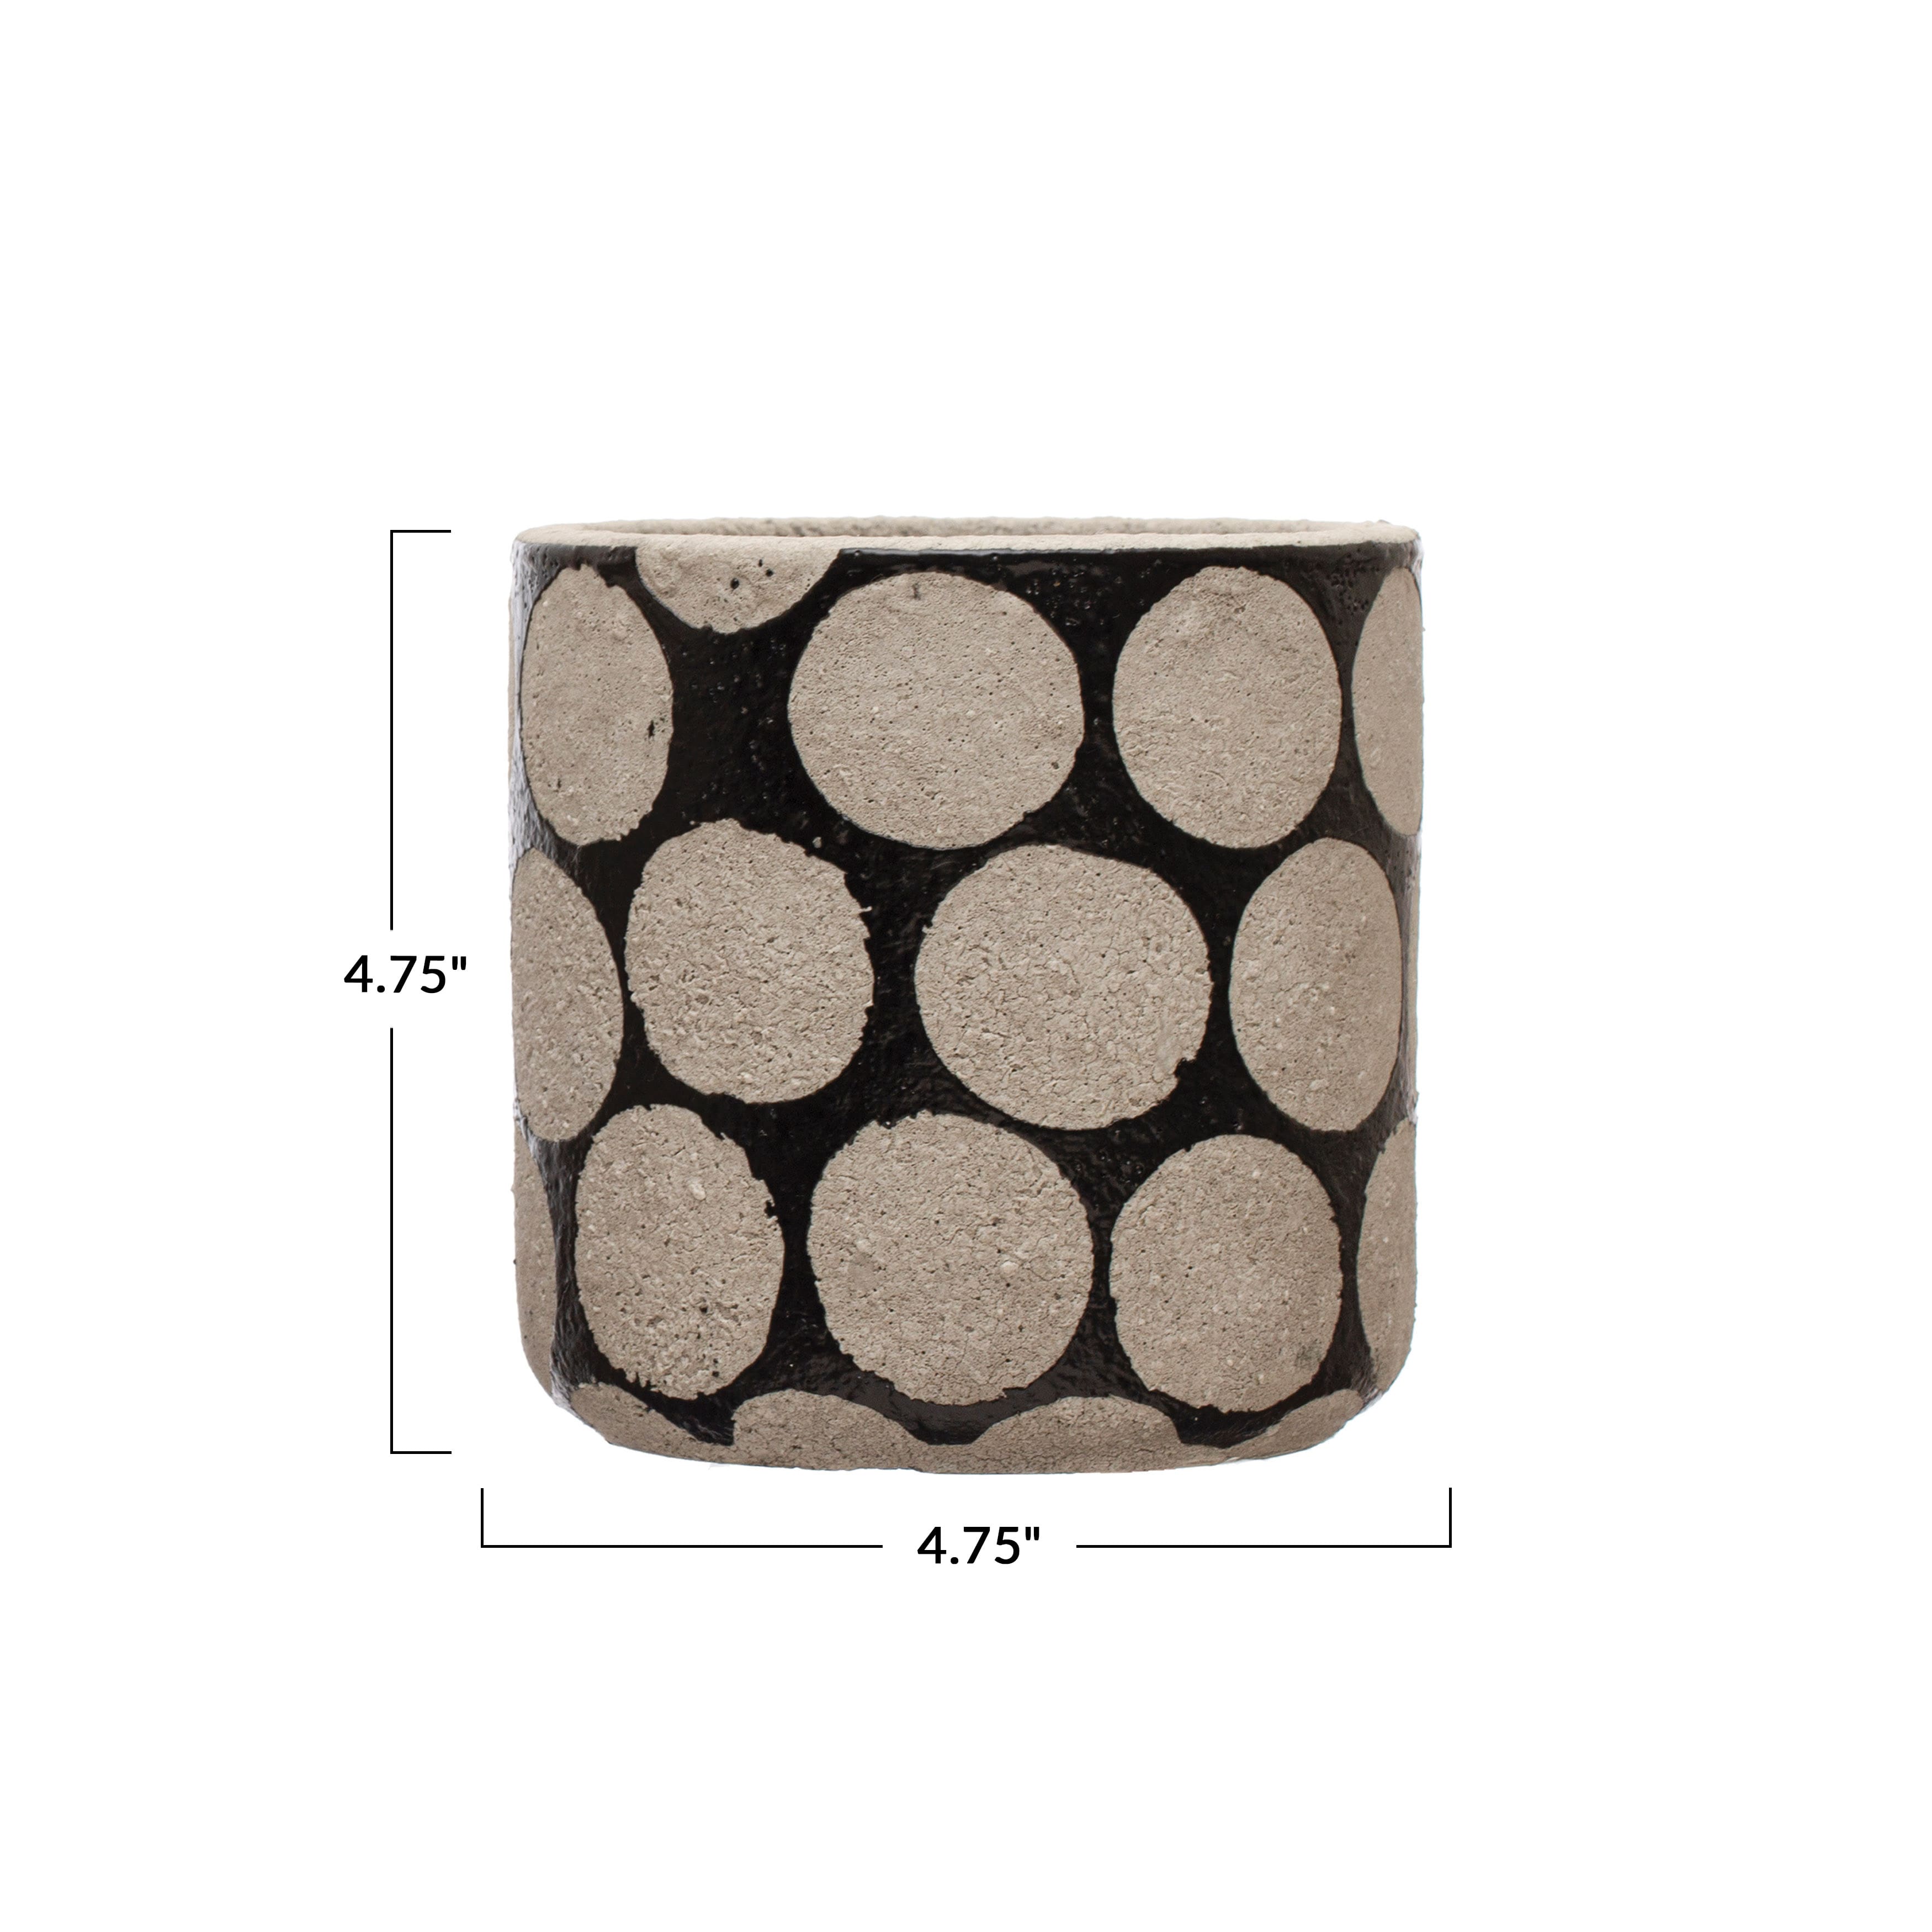 Wax Relief Dots Terracotta Planter